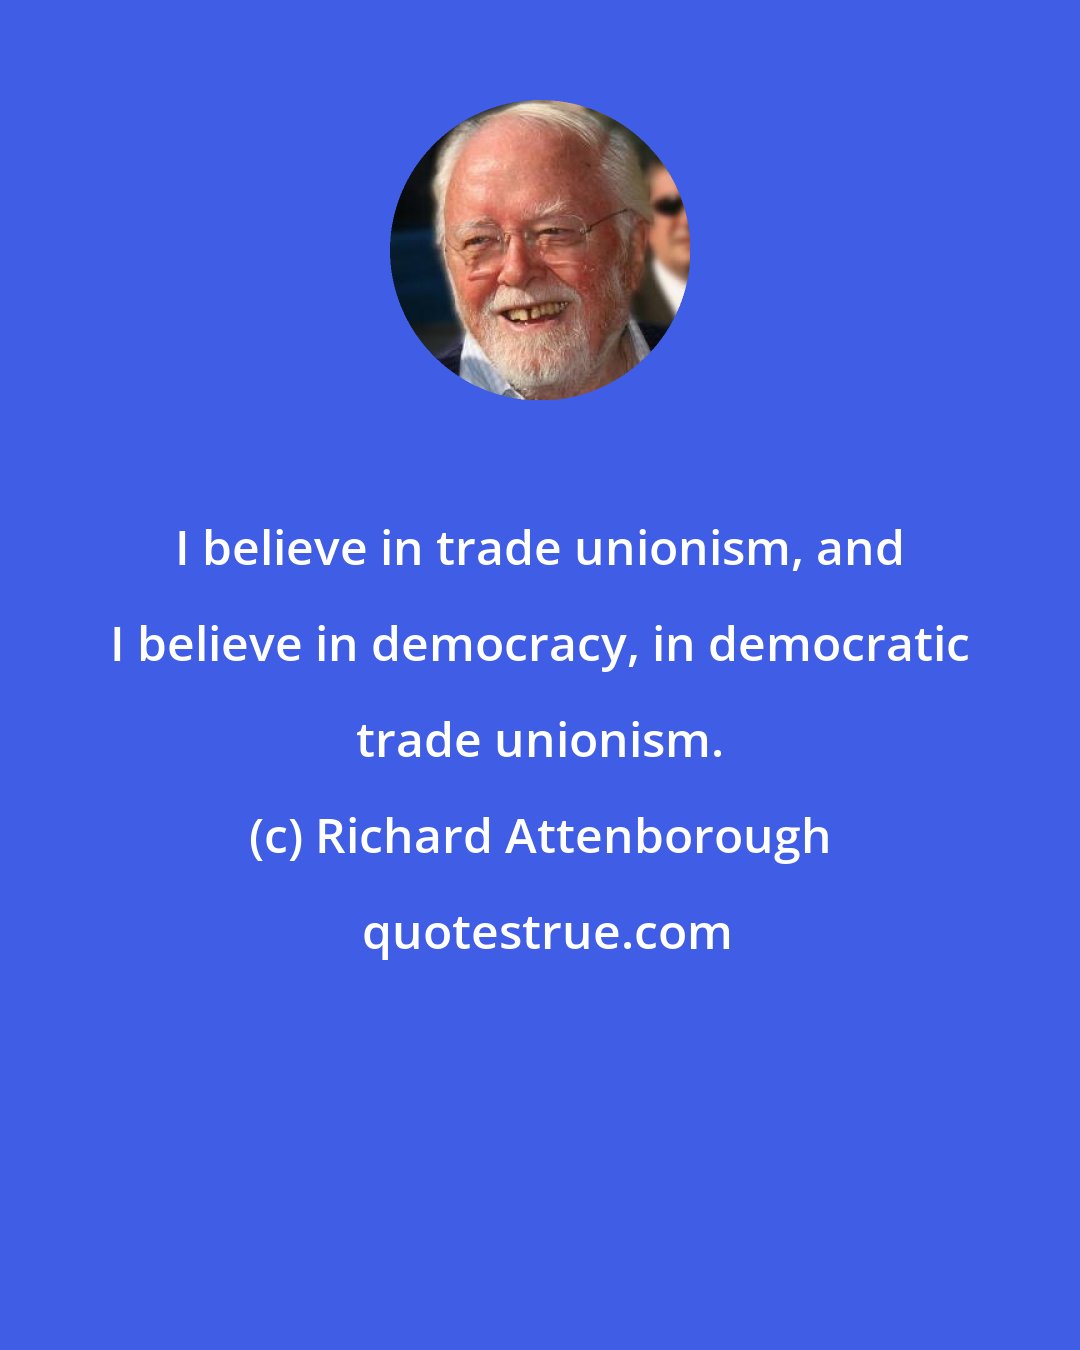 Richard Attenborough: I believe in trade unionism, and I believe in democracy, in democratic trade unionism.